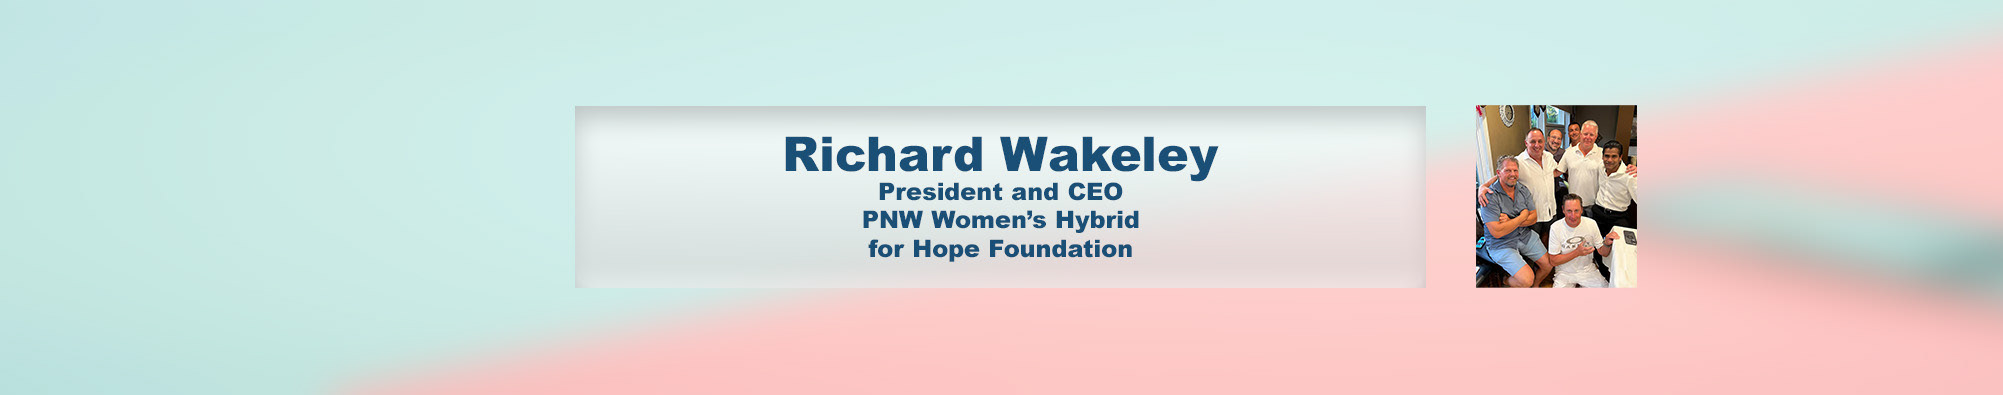 Richard Wakeley's profile banner